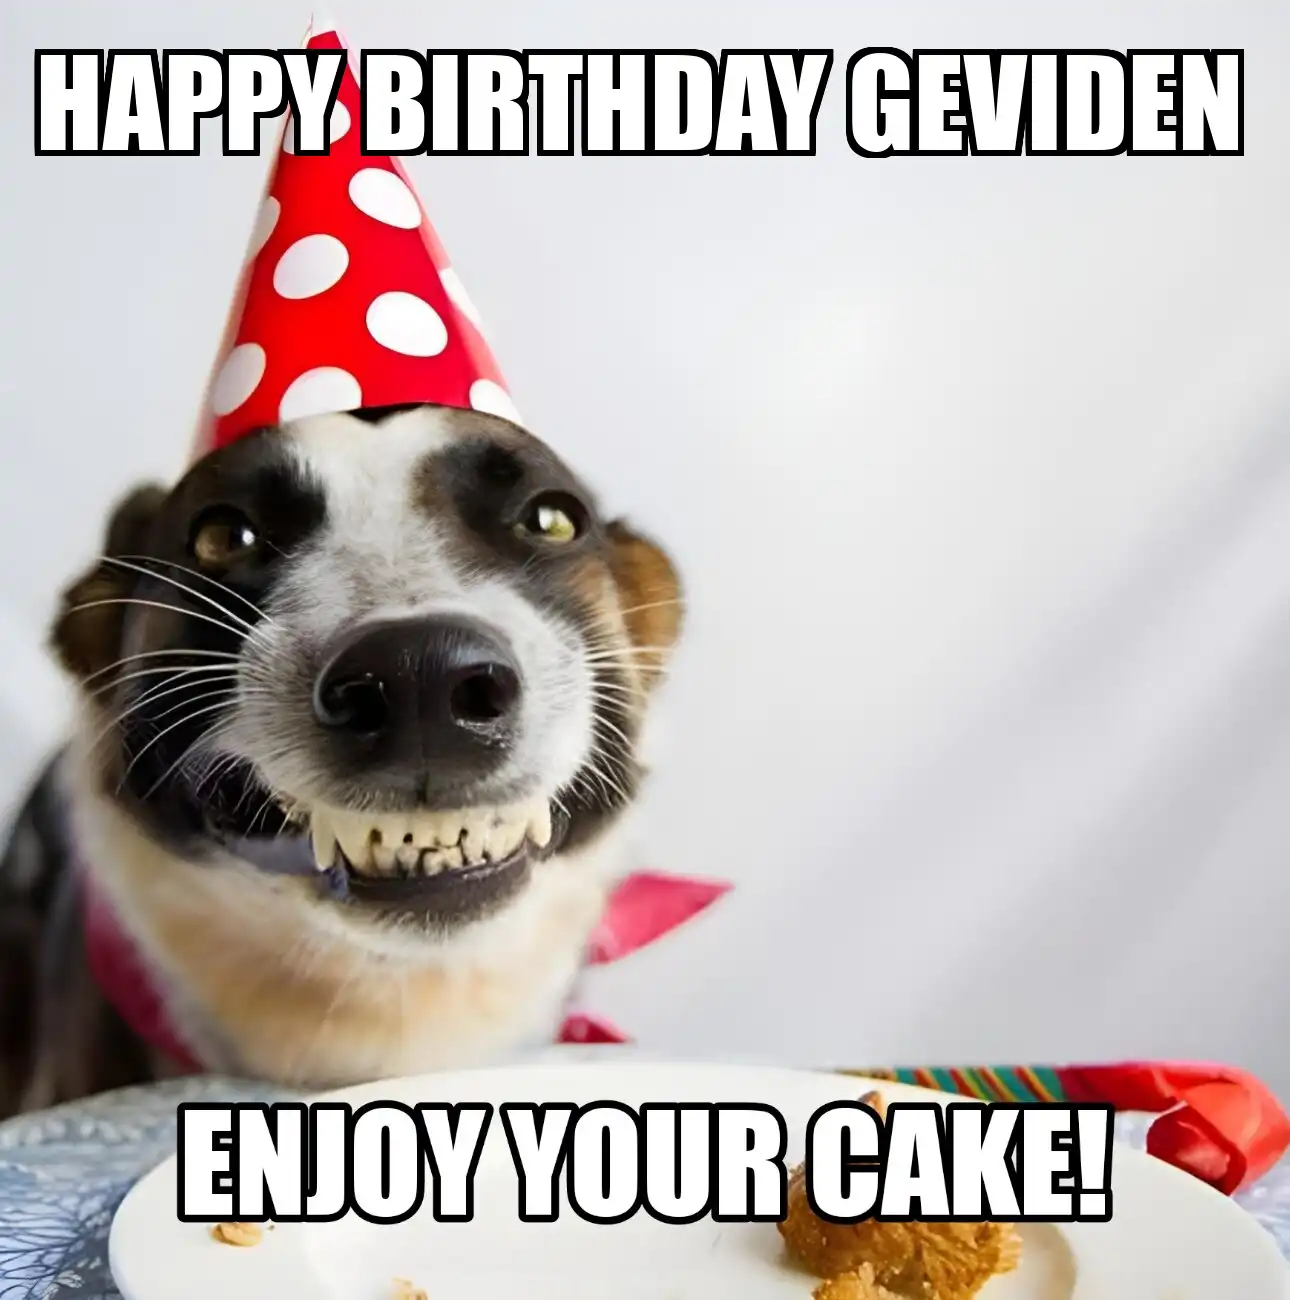 Happy Birthday Geviden Enjoy Your Cake Dog Meme